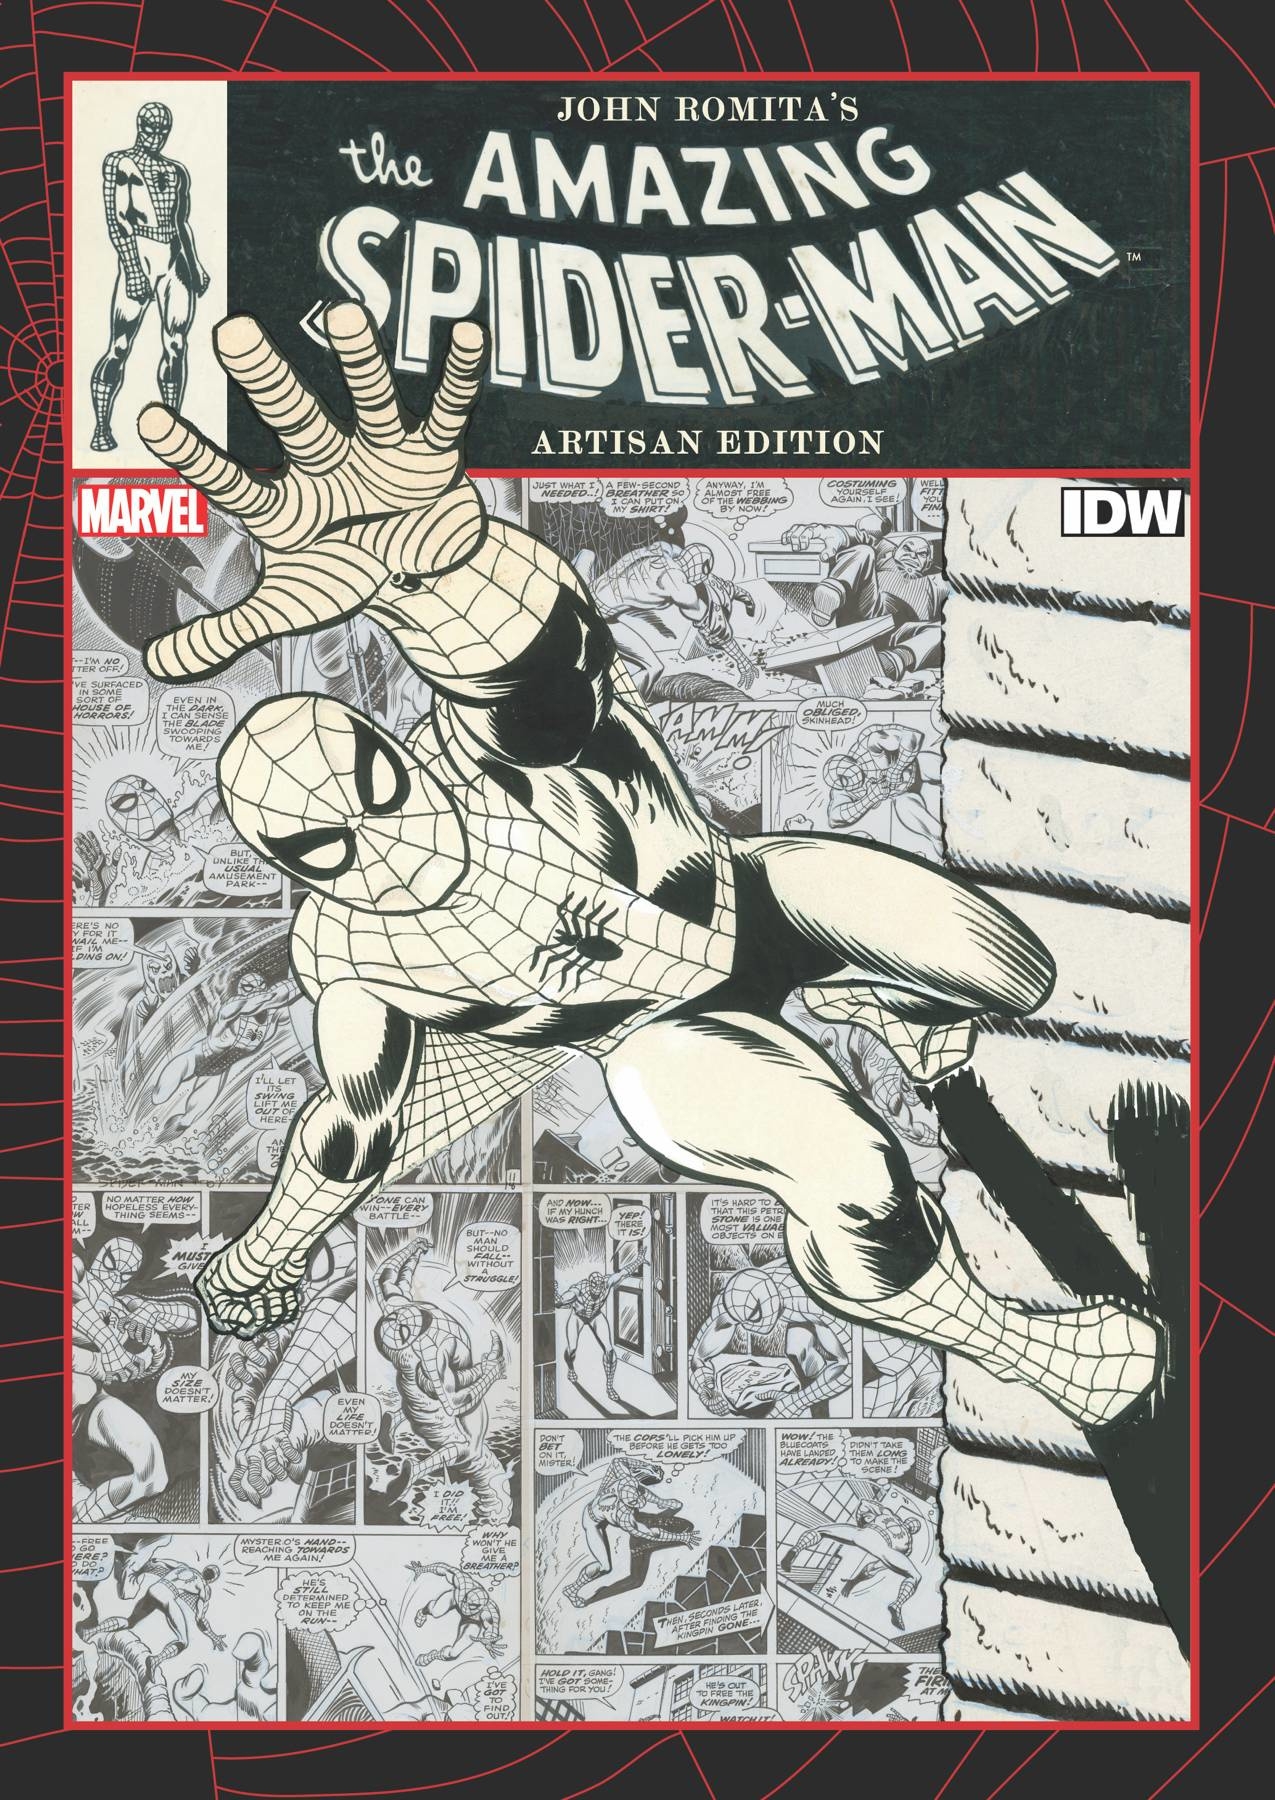 John Romita's The Amazing Spider Man Artisan Edition cover